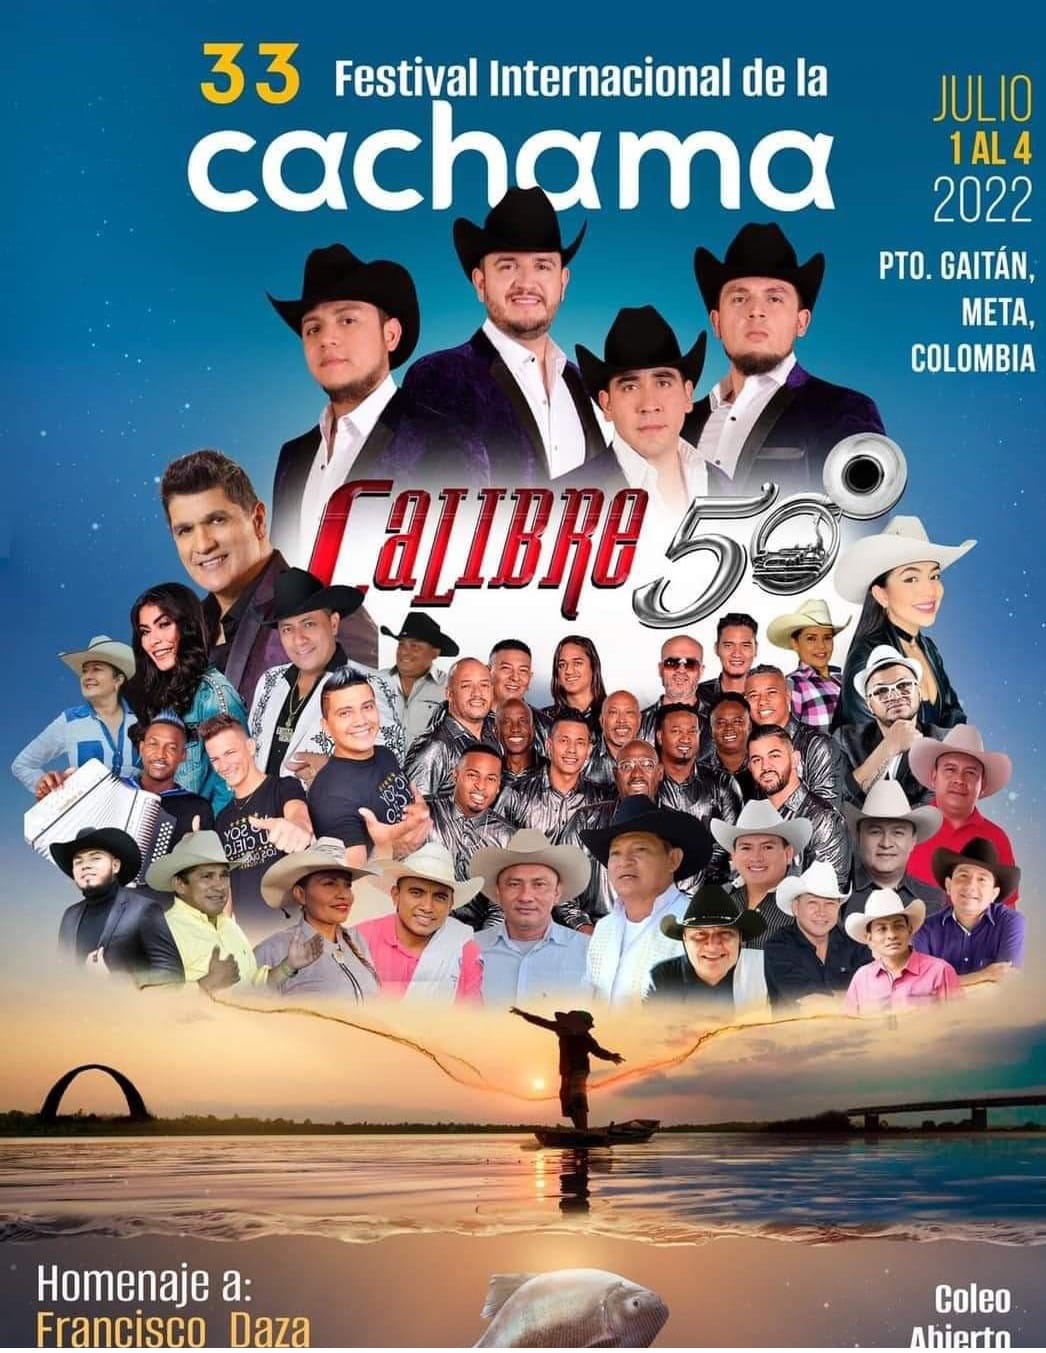 33 Festival Internacional de la Cachama